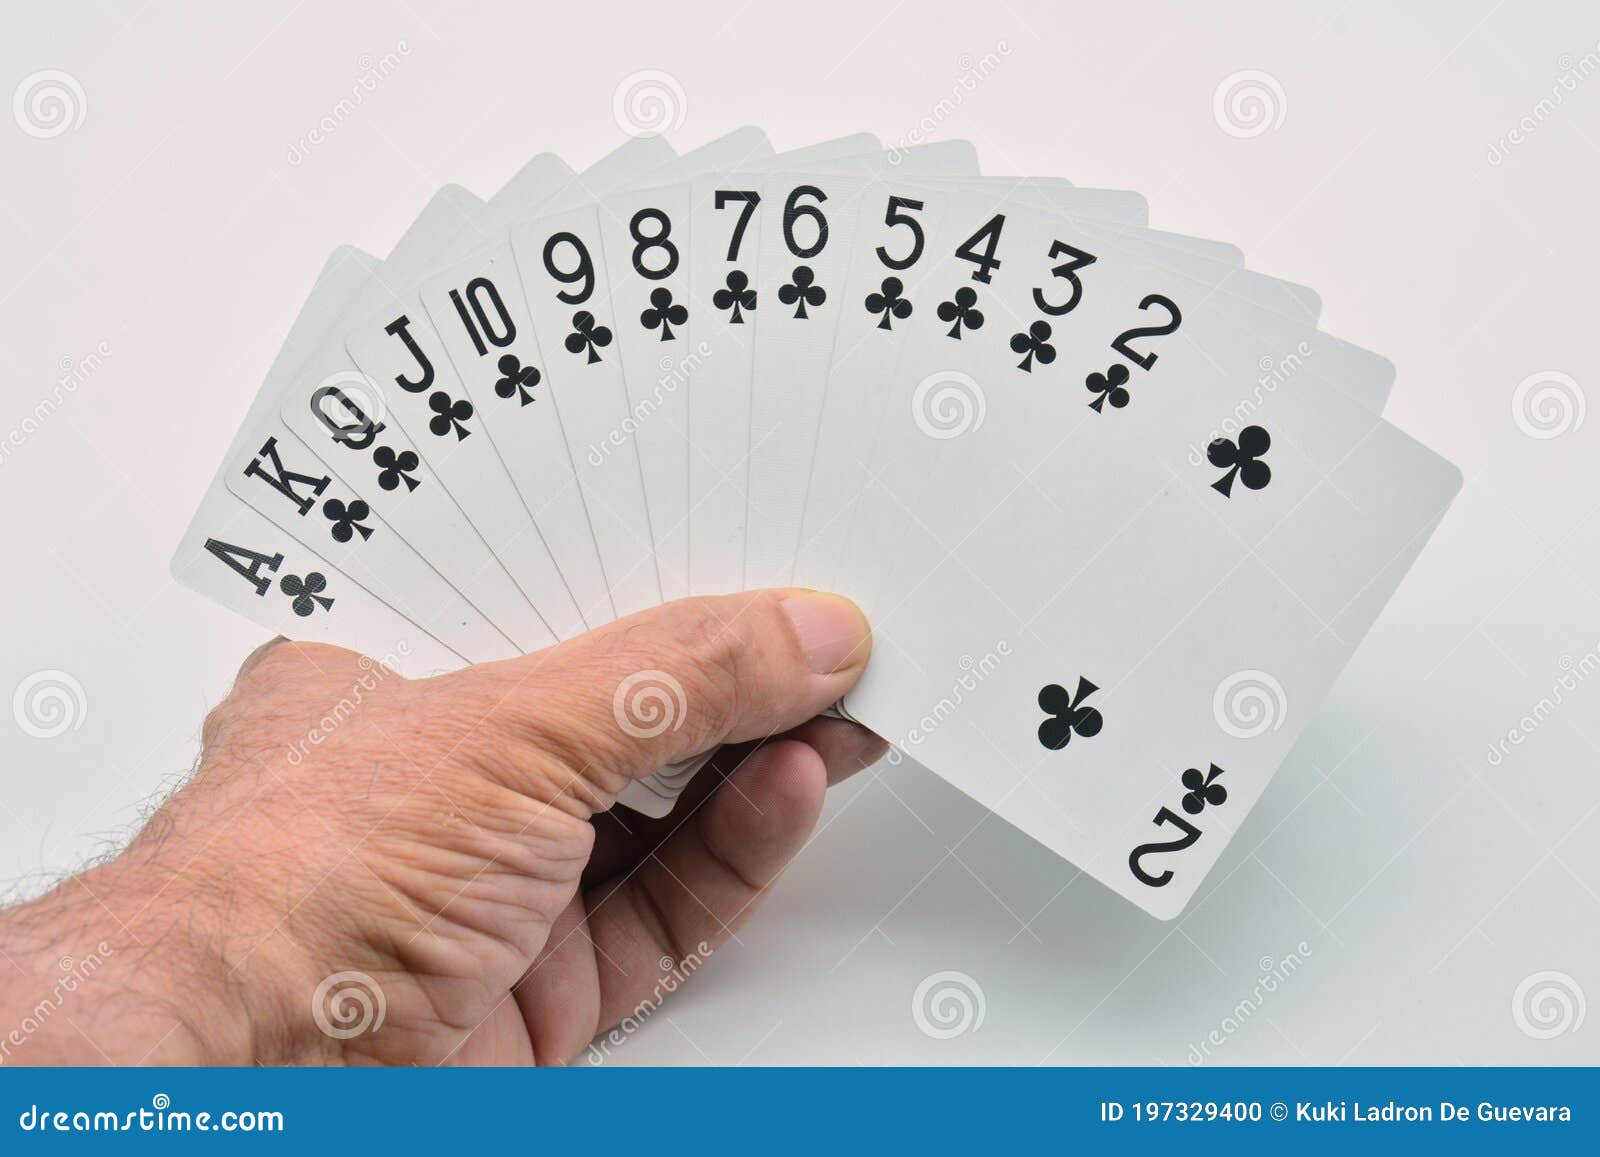 poker card plays